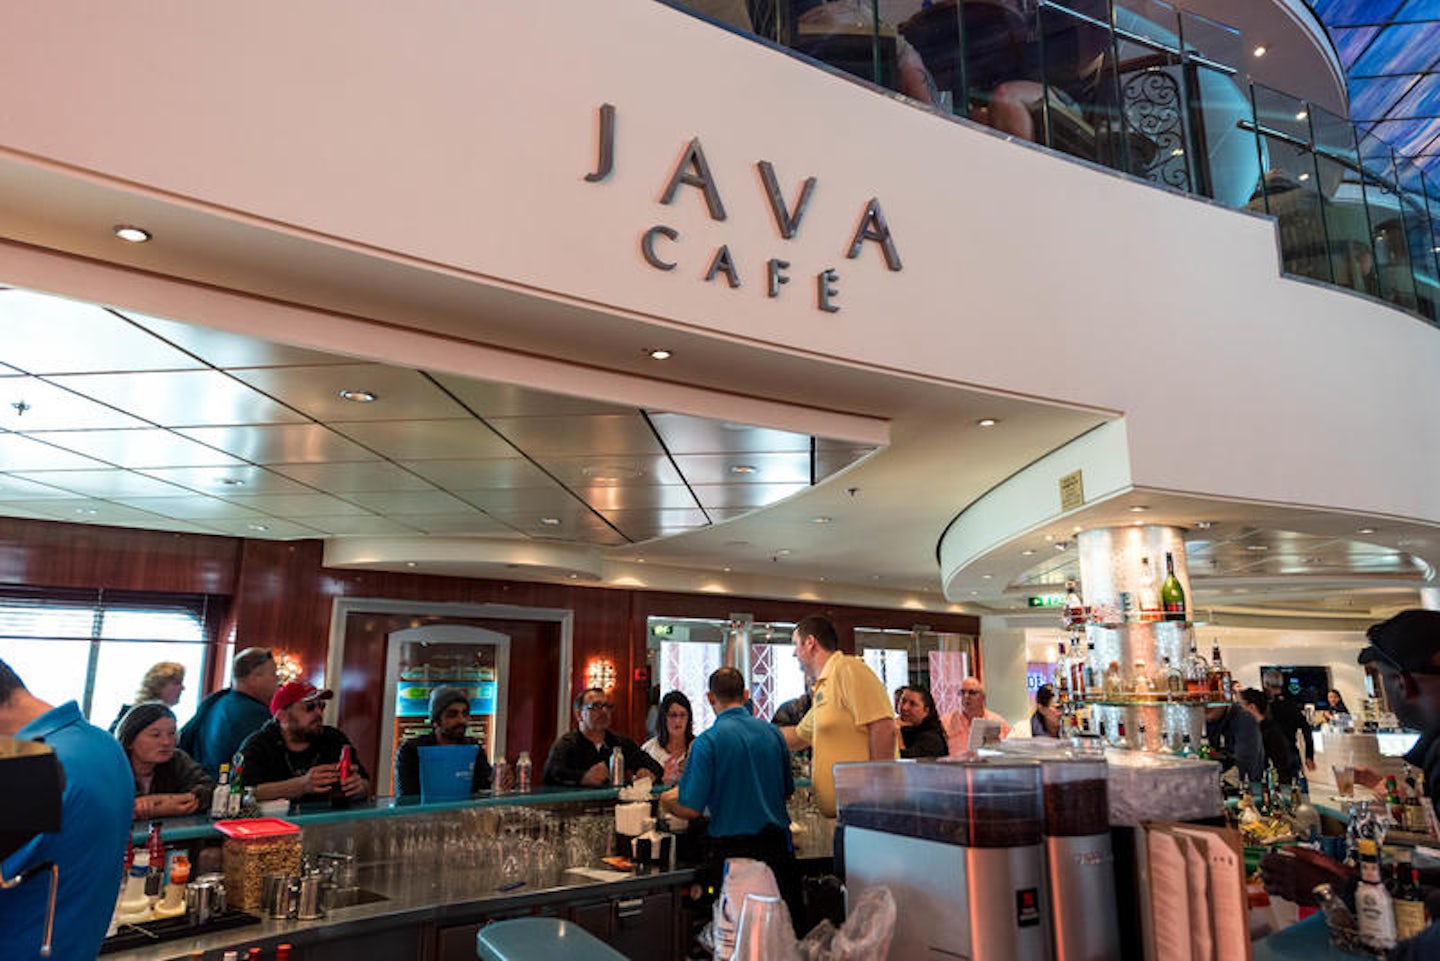 Java Cafe on Norwegian Pearl